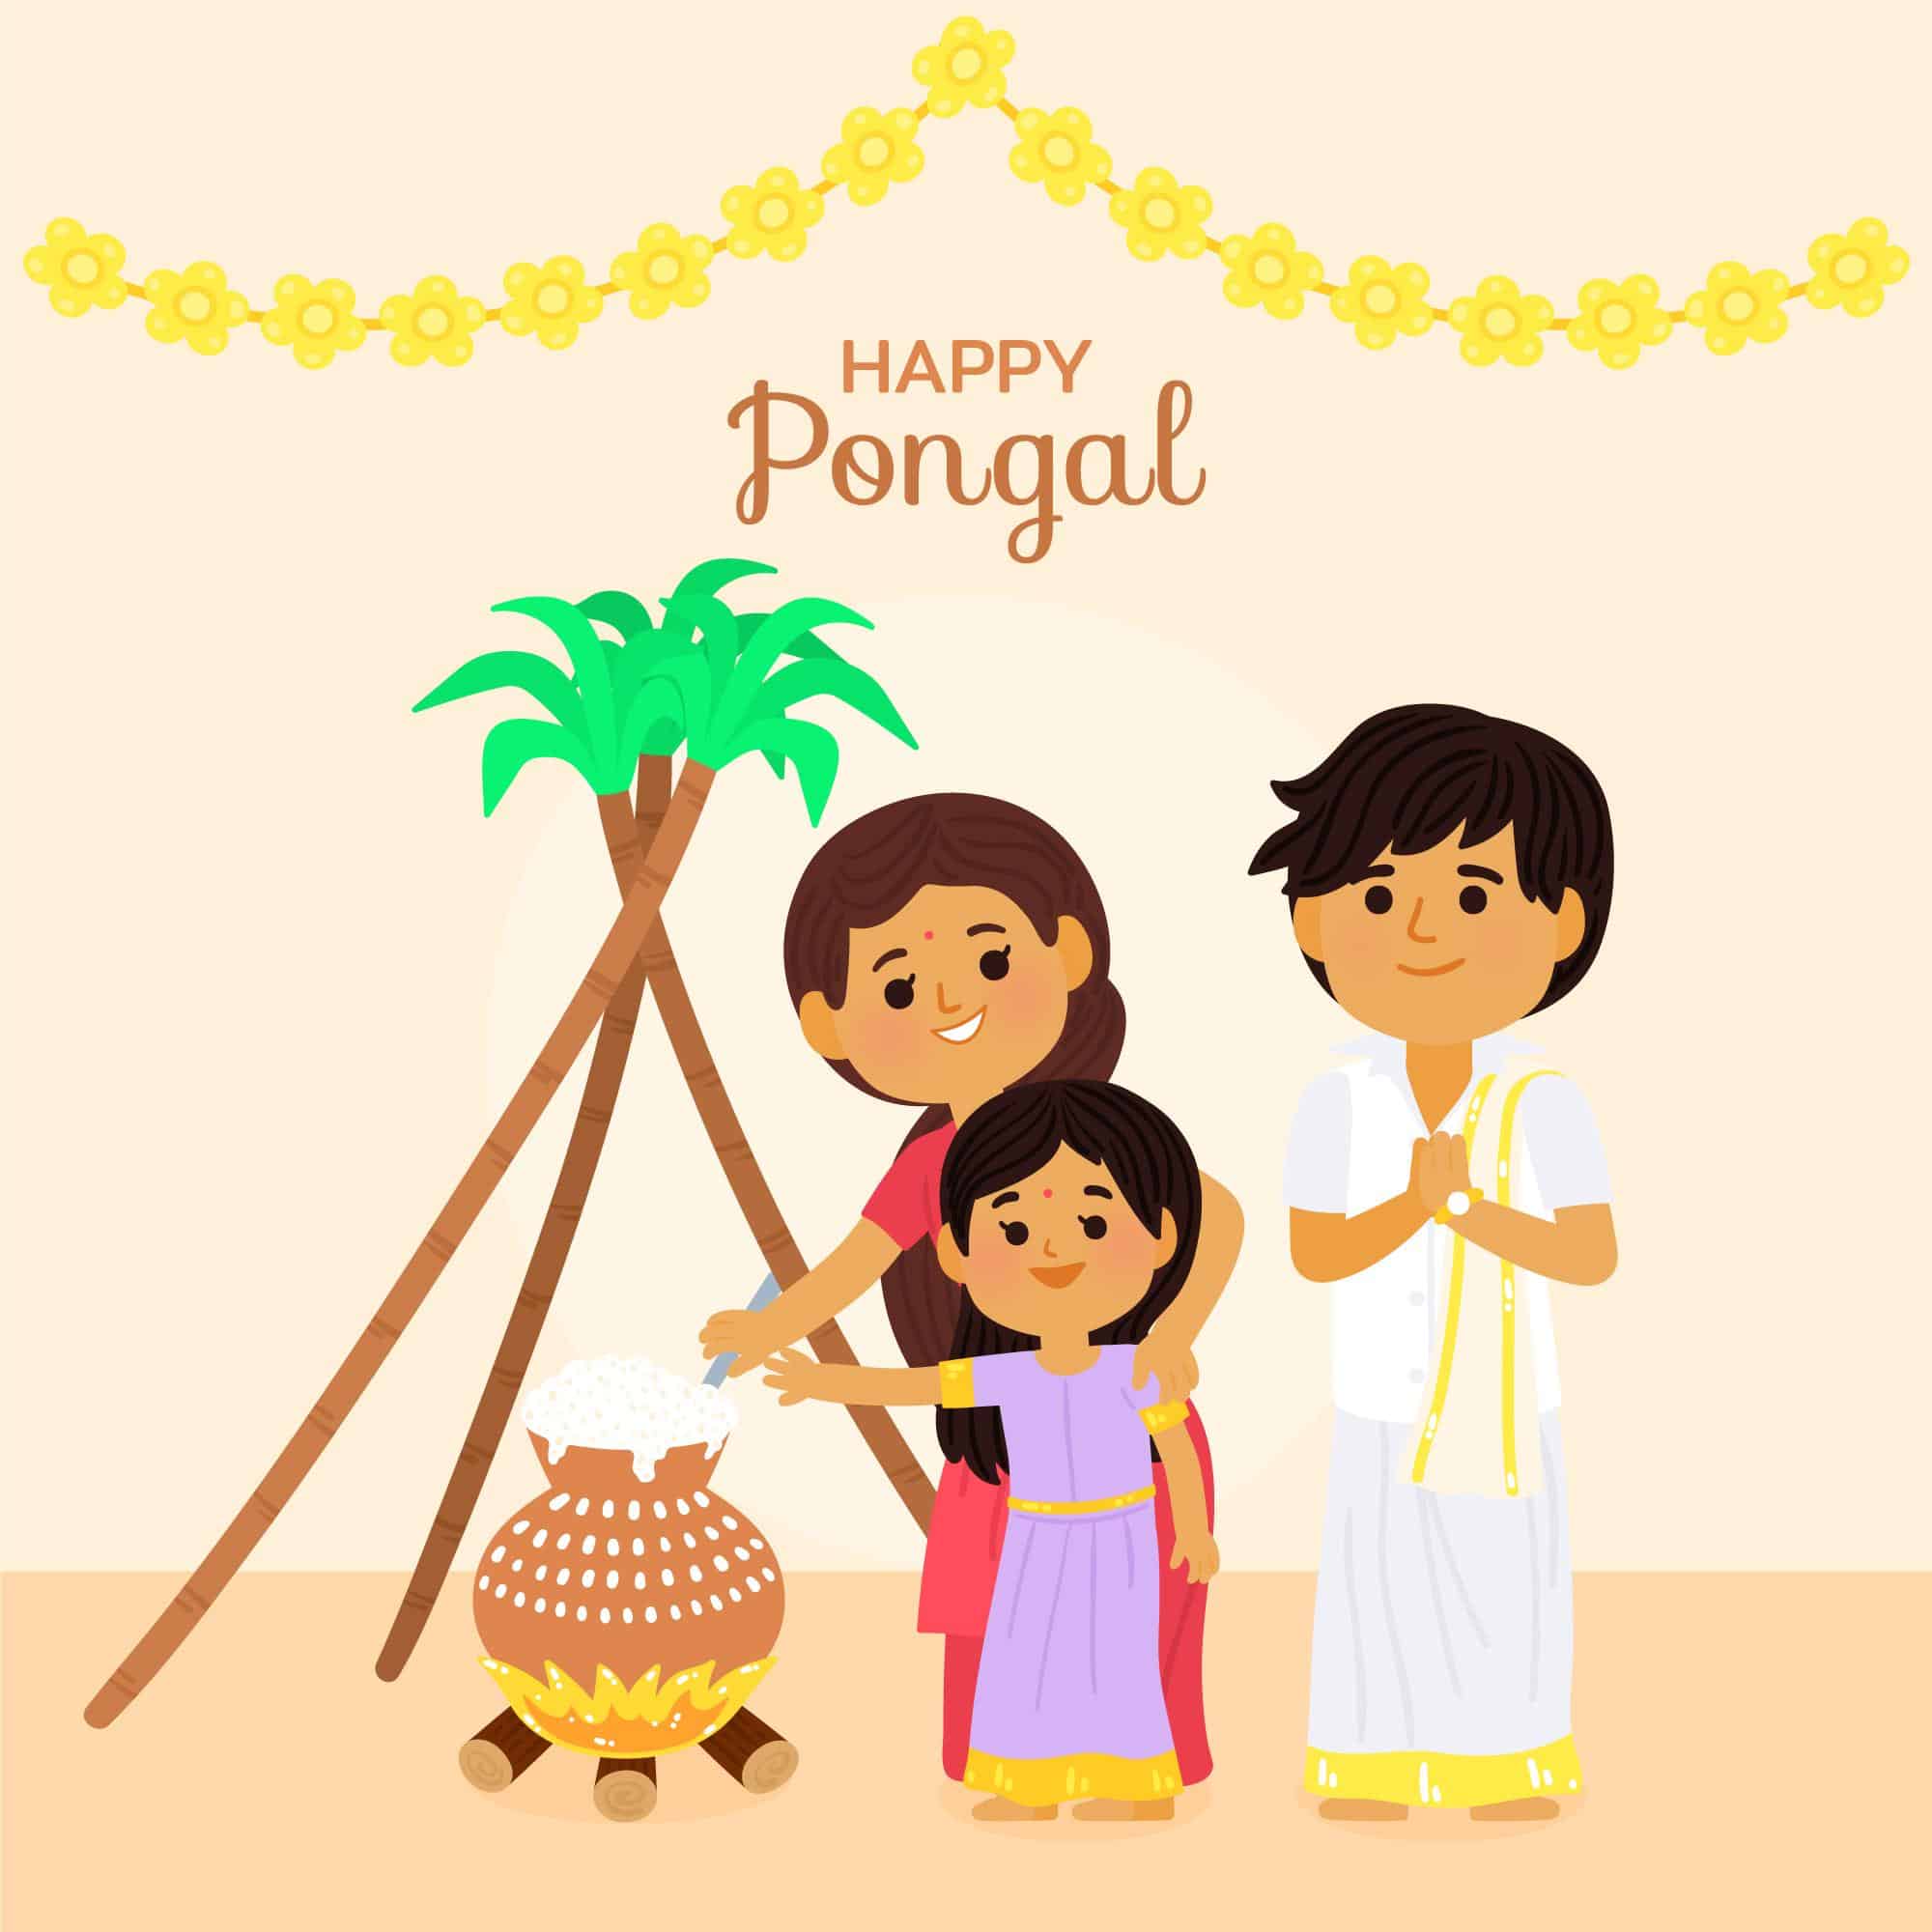 Happy Pongal Pictures